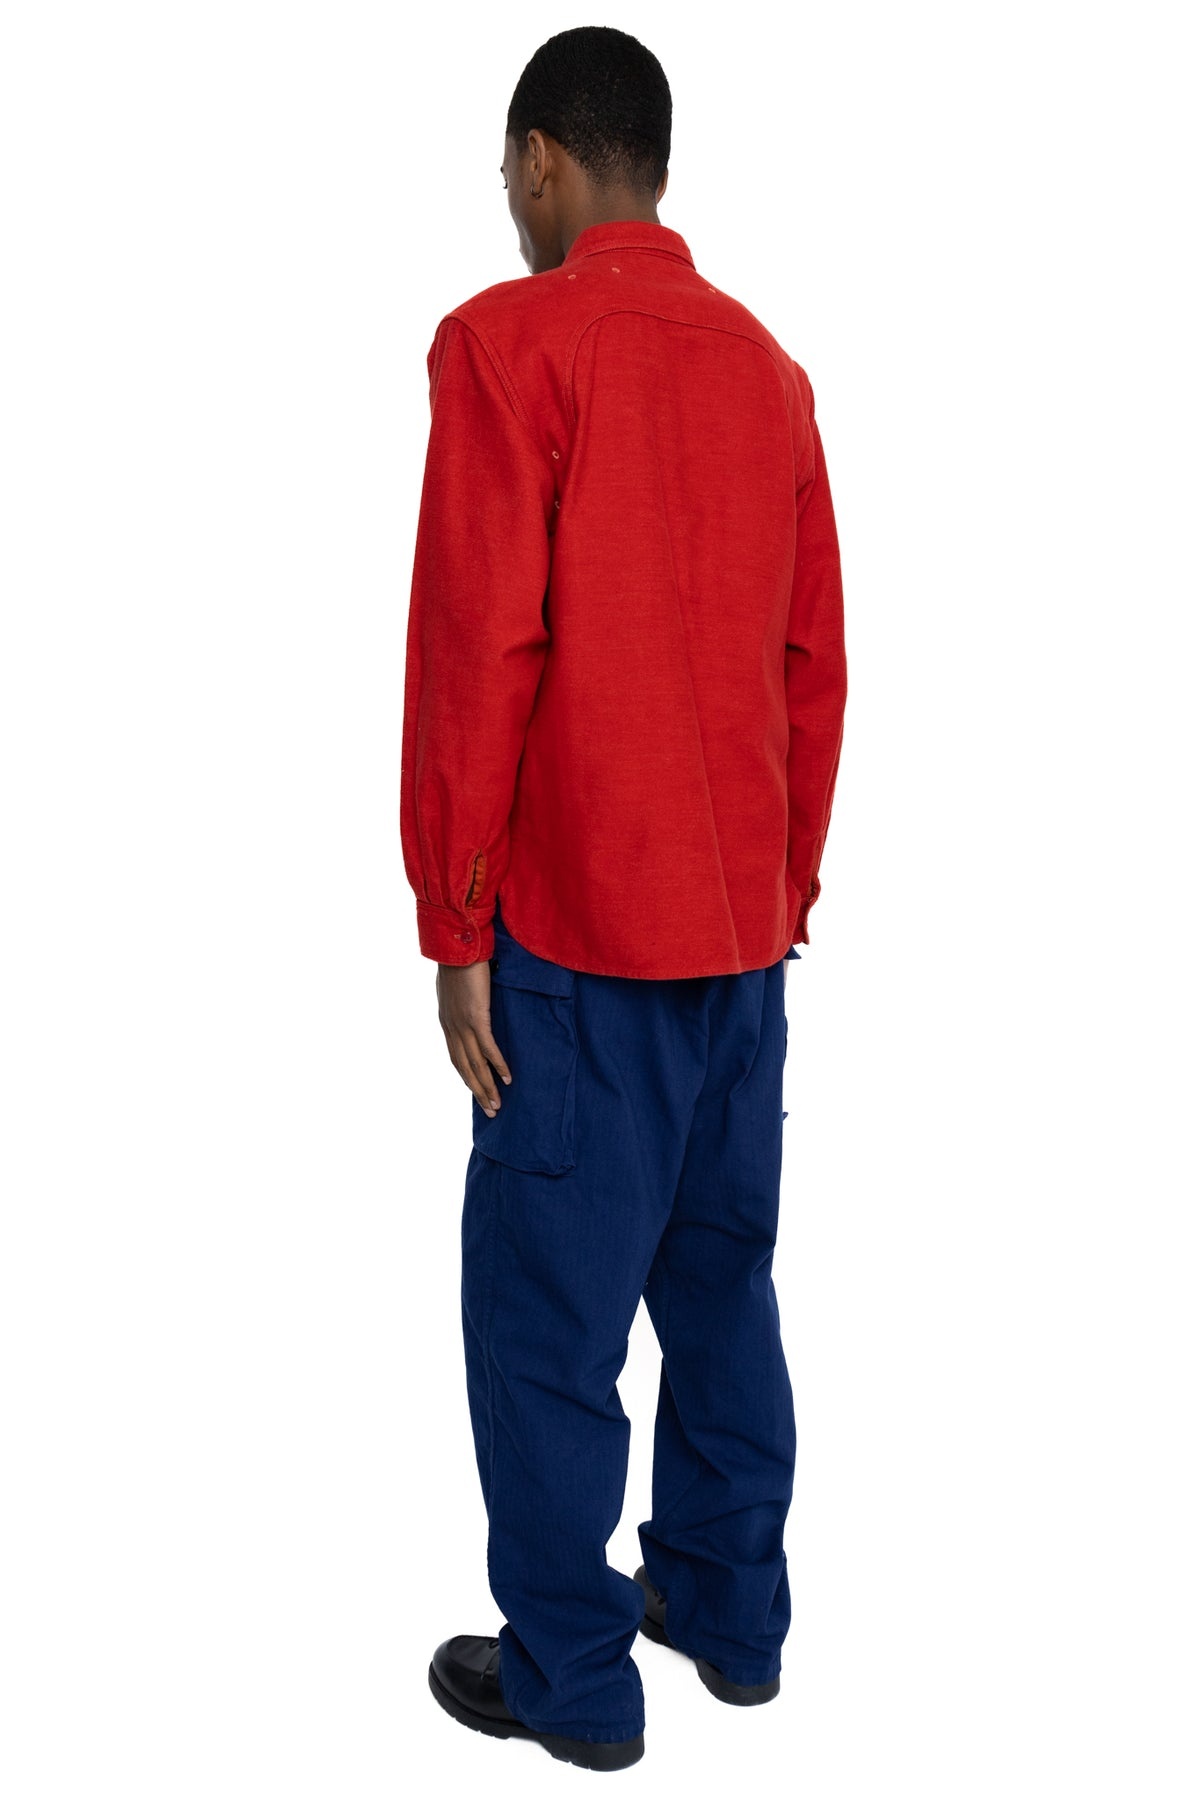 CPO Cotton Wool MOPAR Shirt - Red - 5